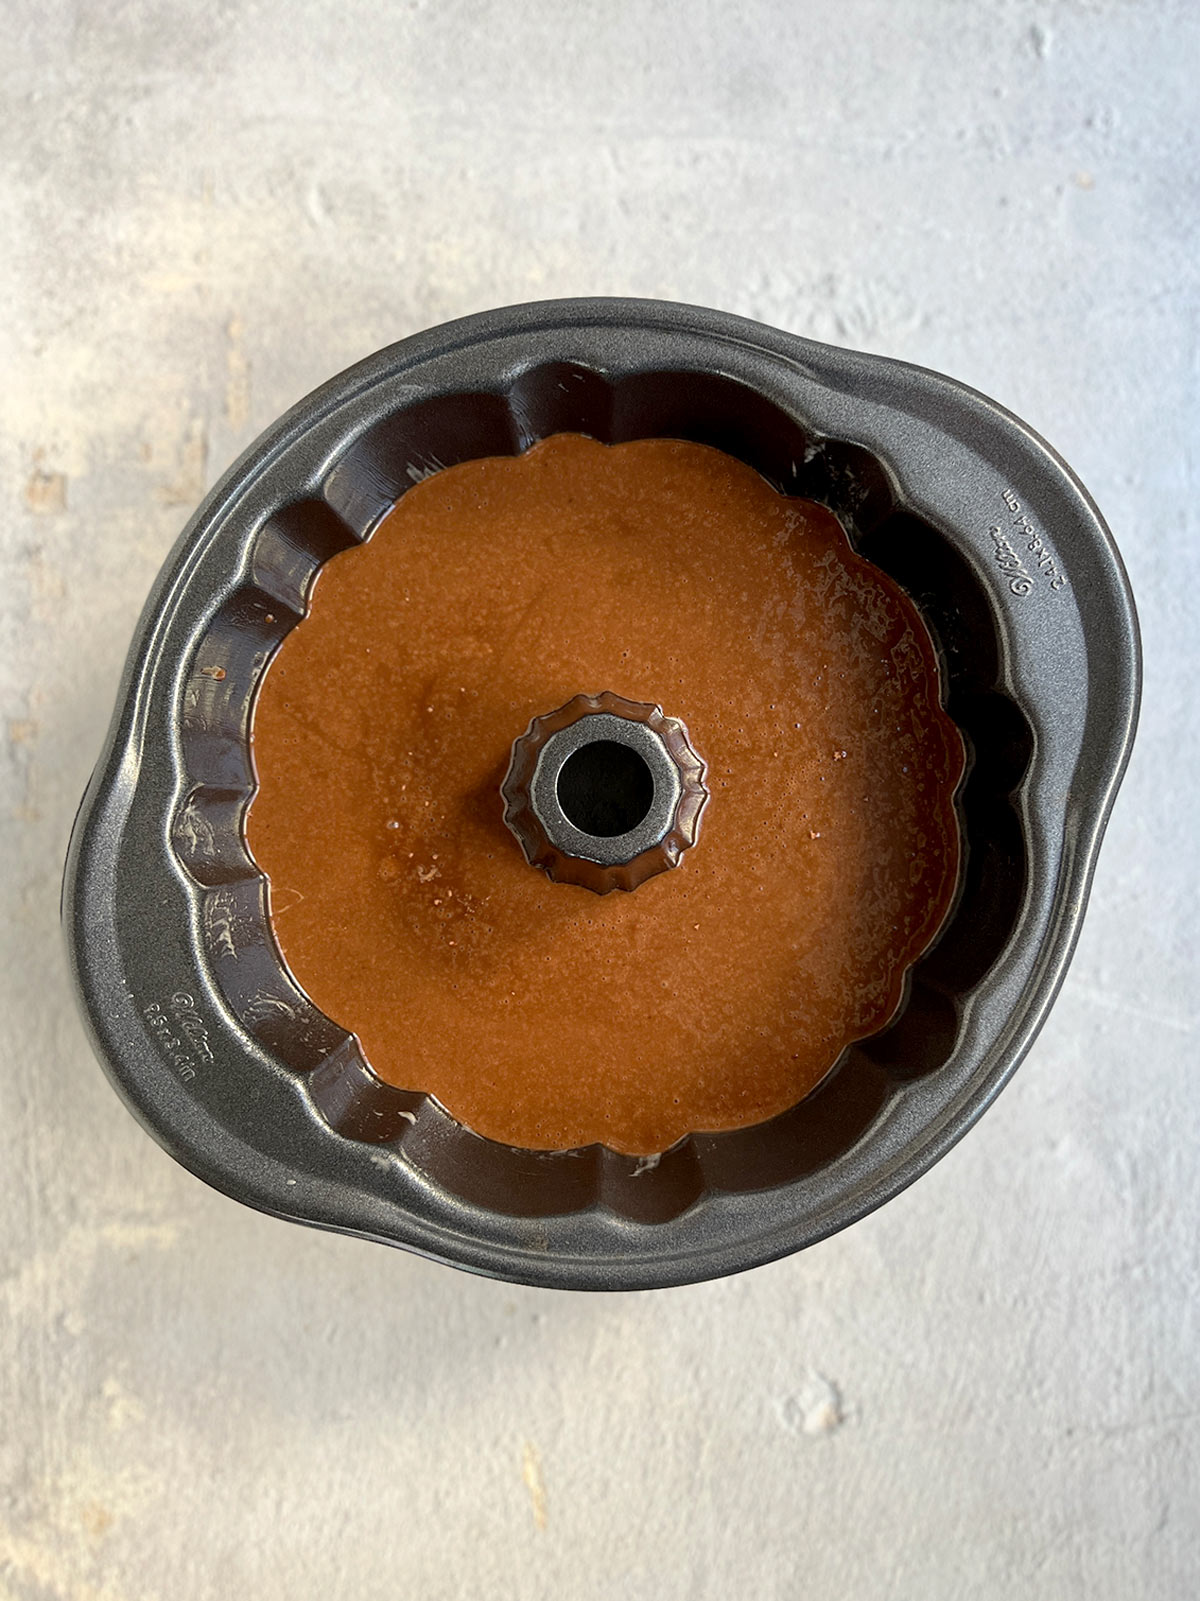 Cake batter in a Bundt pan.